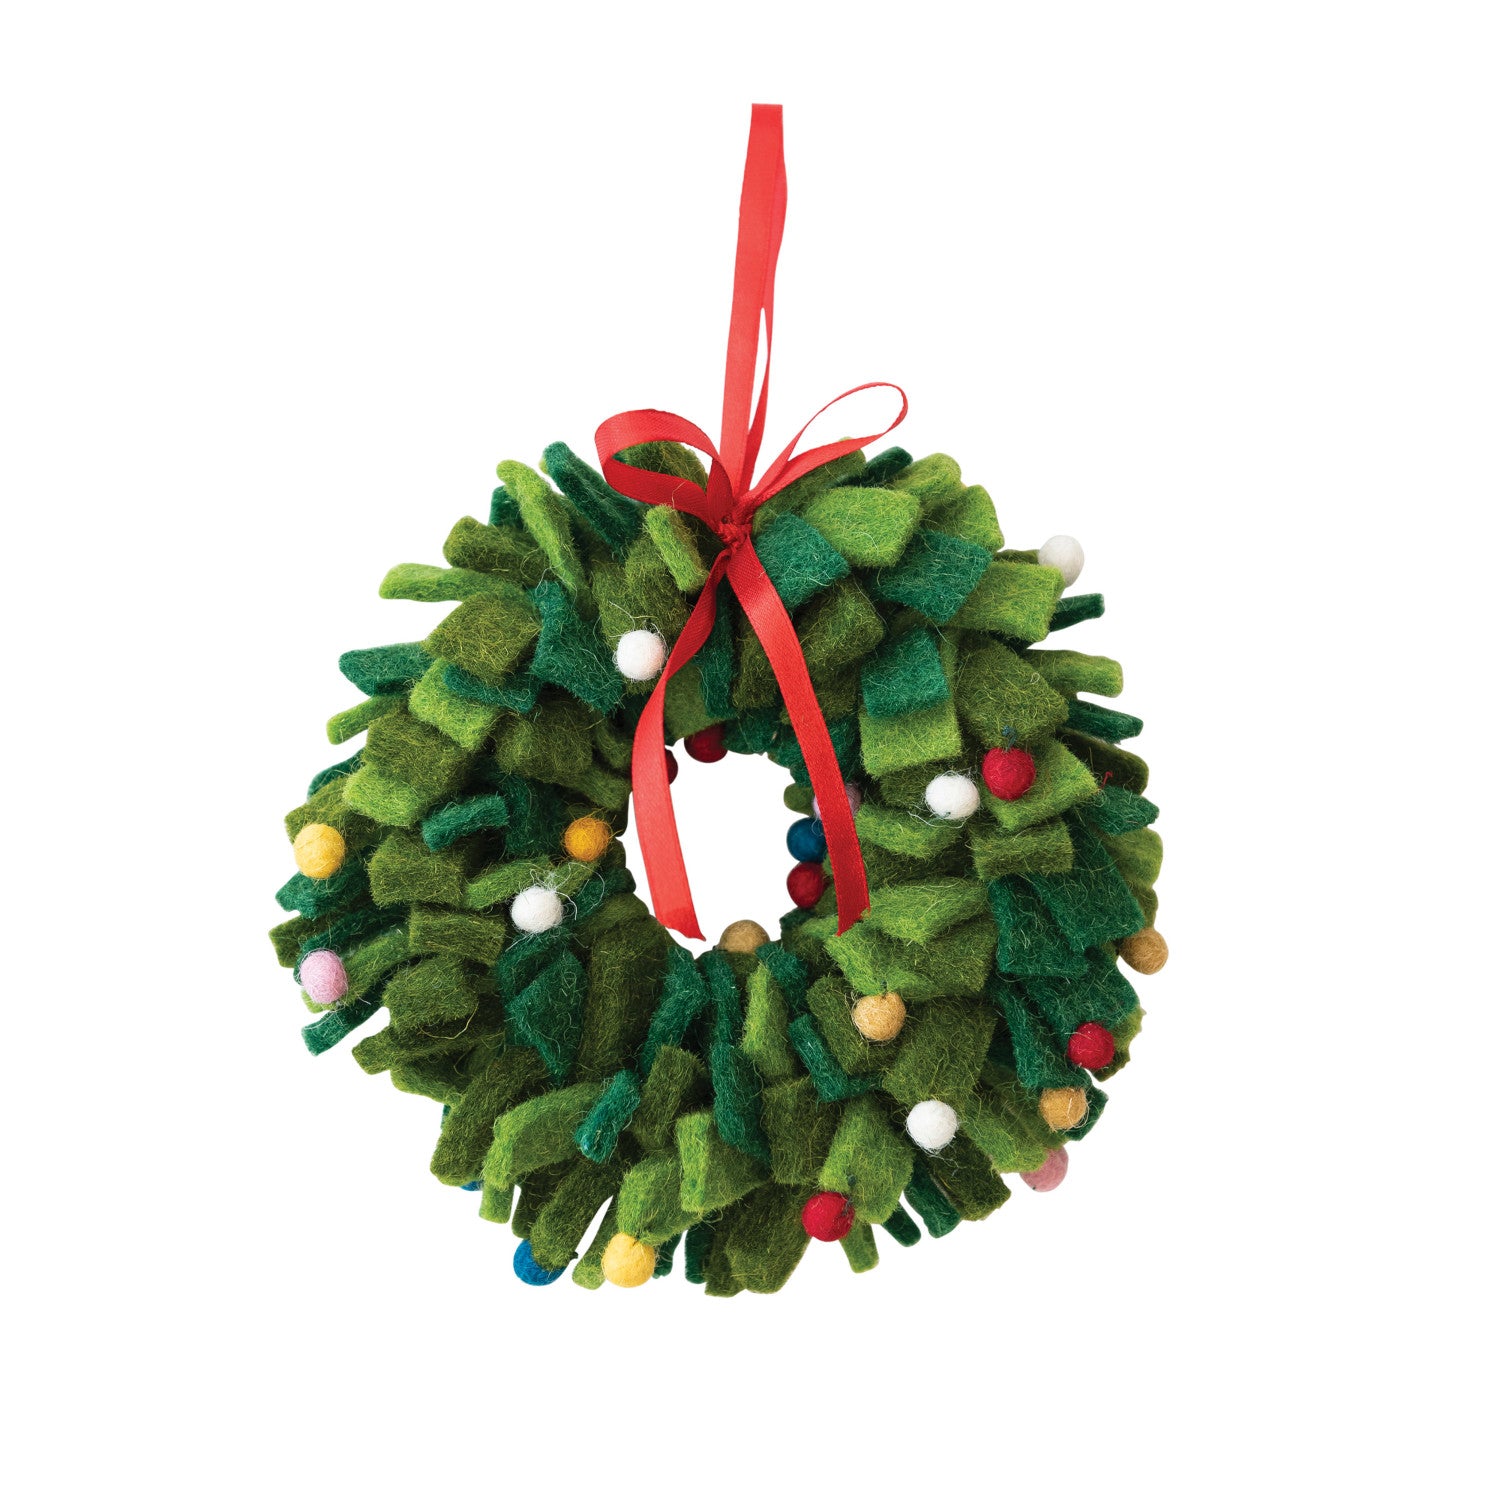 Handmade Wool Wreath Ornament